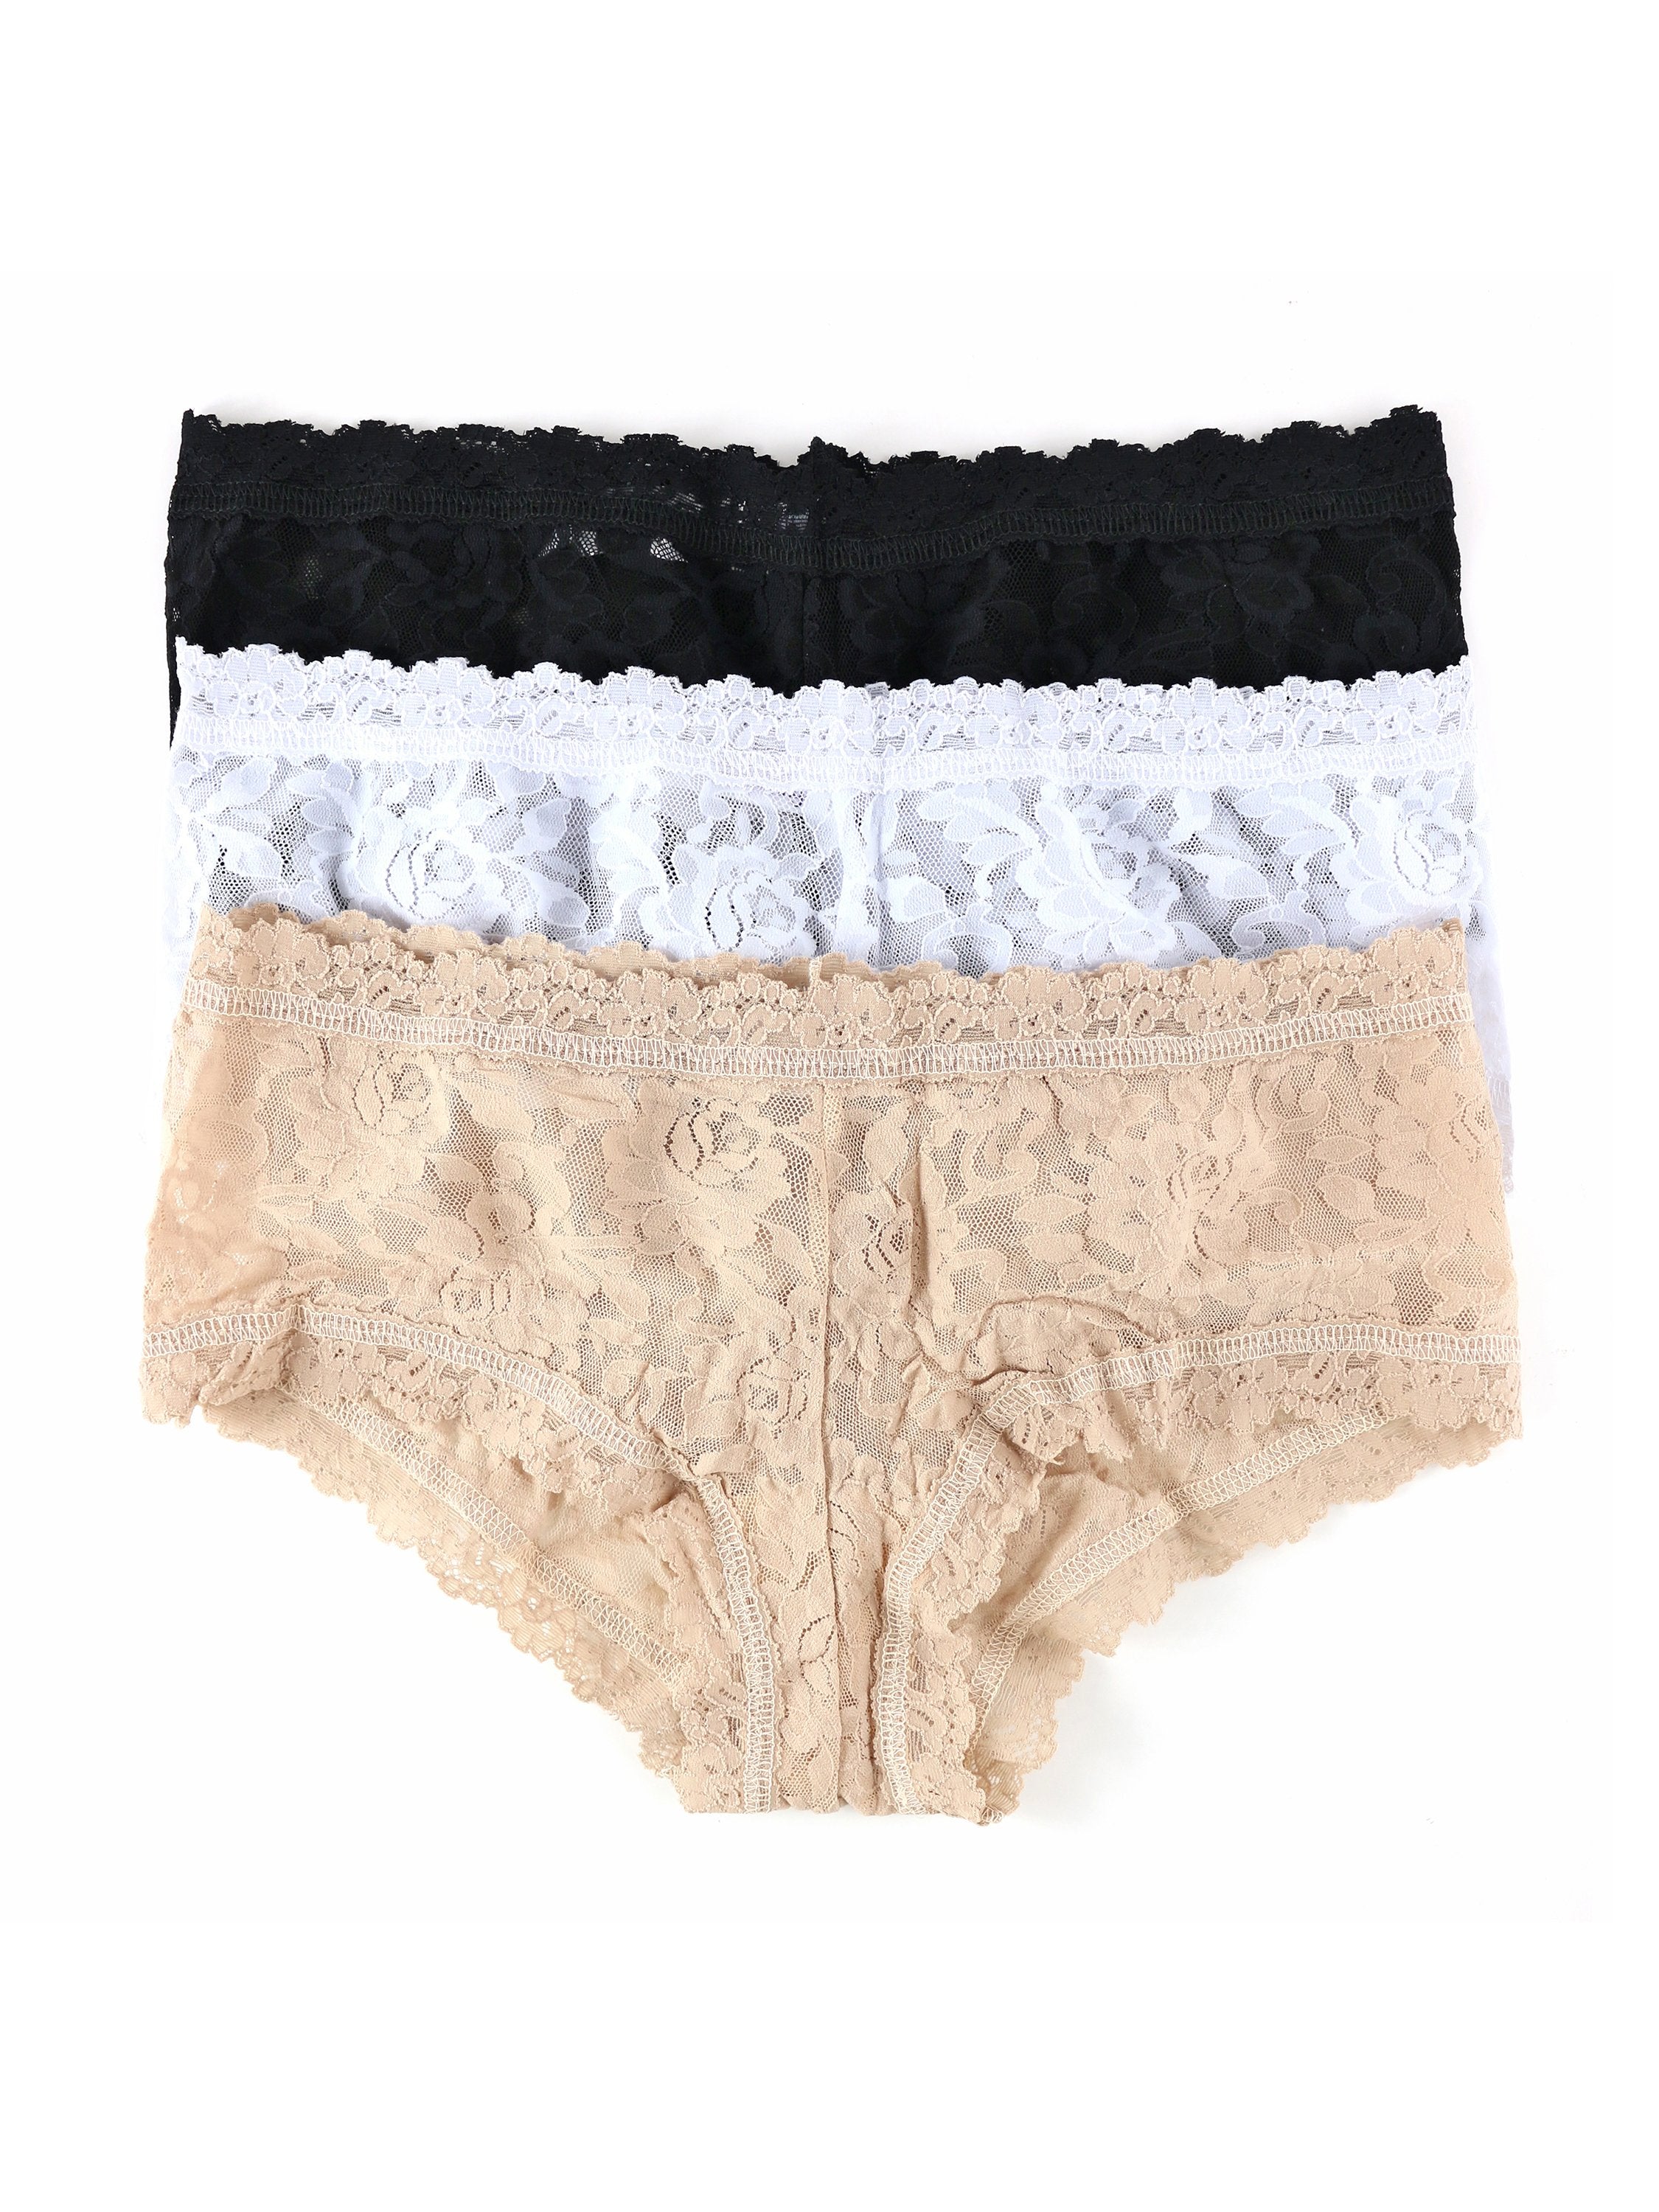 Regular Size Lace Boyshort Panties(6 Pack)